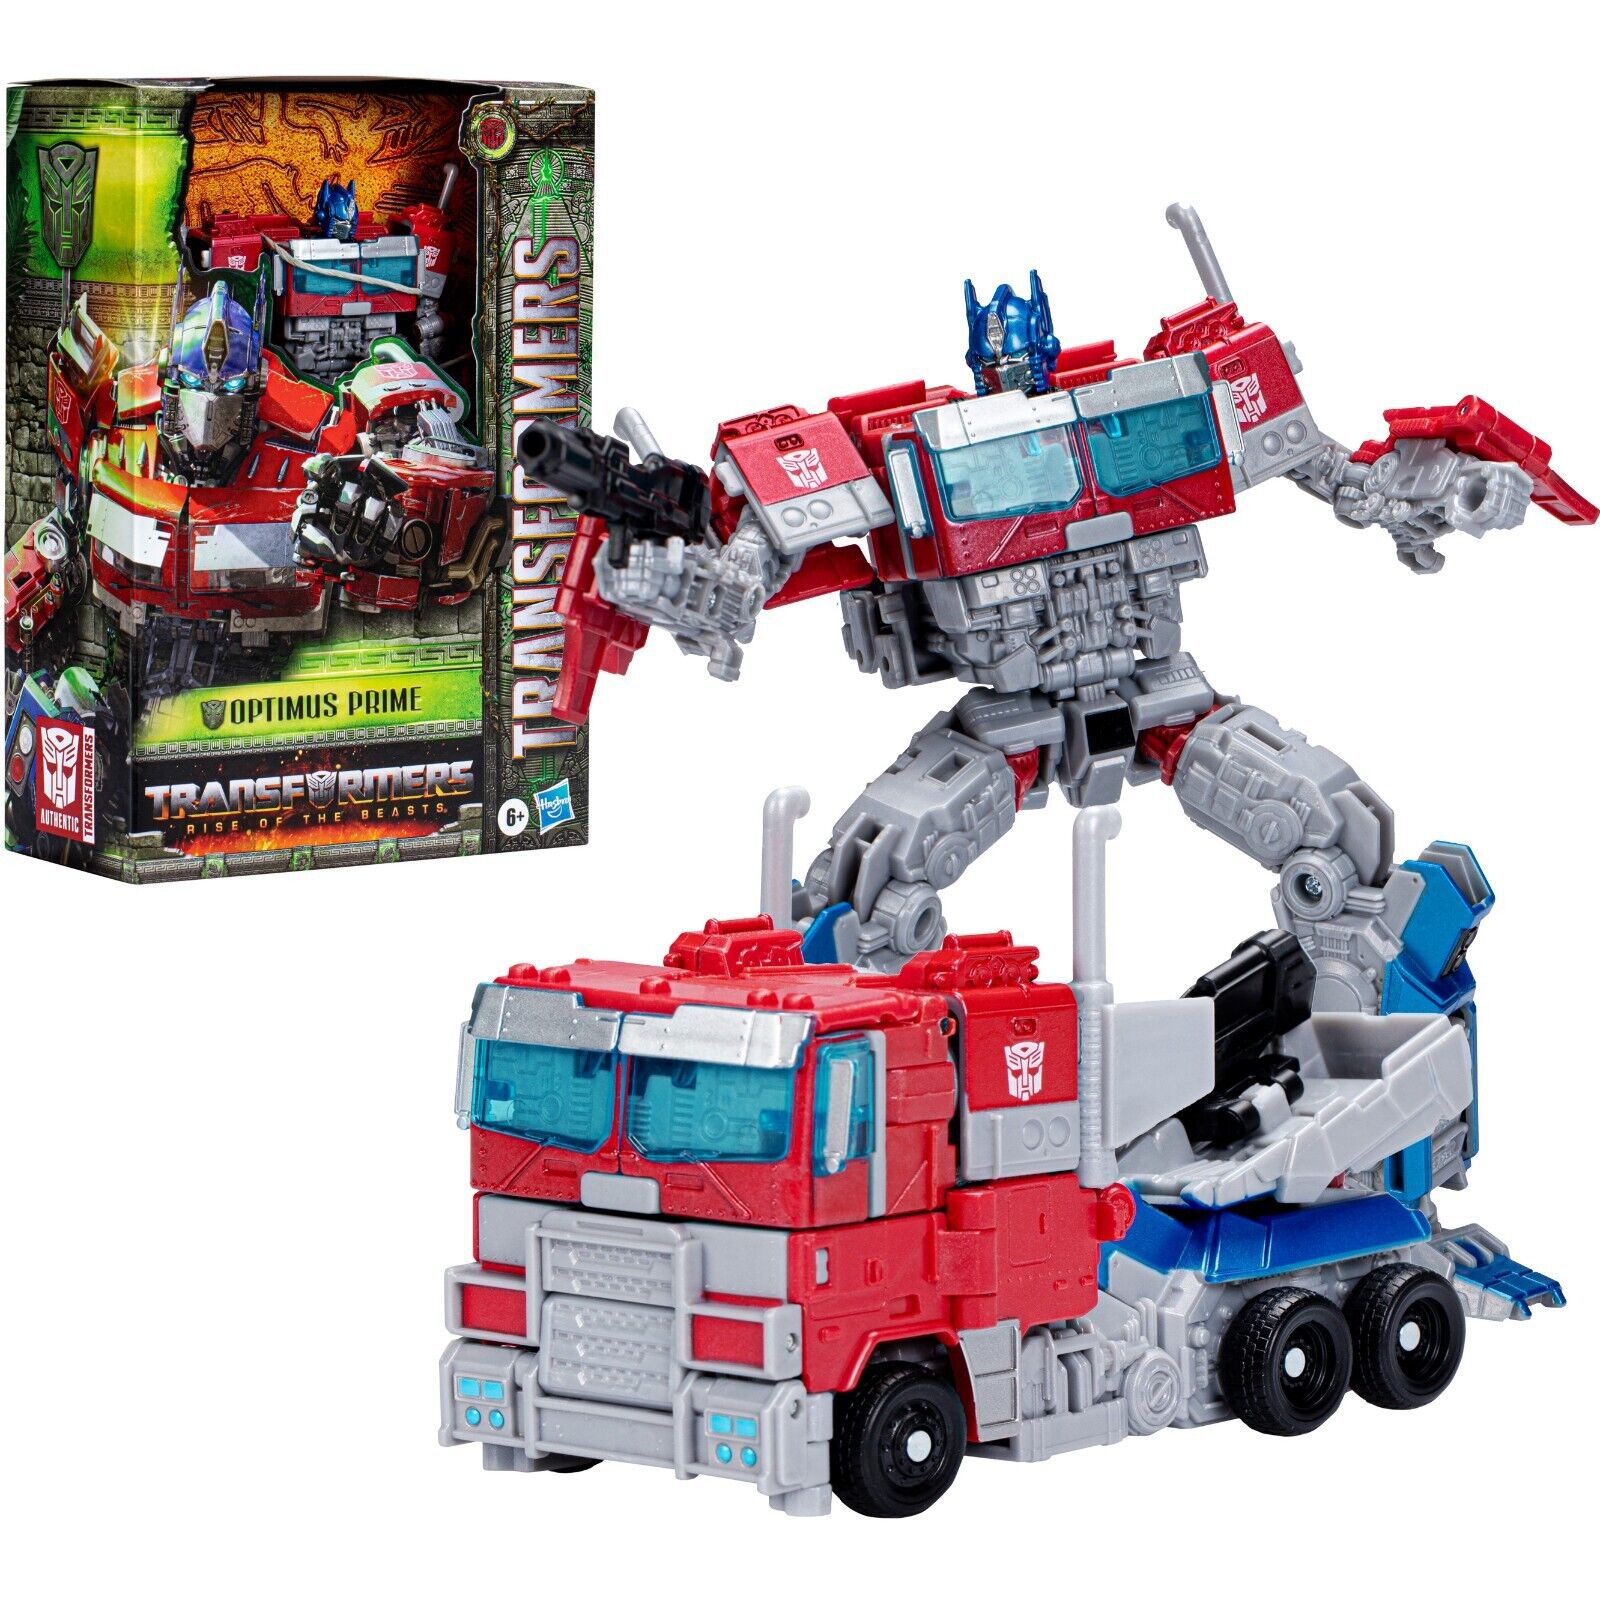 Transformers Bumbblebee e Optimus Prime personagens para Centro